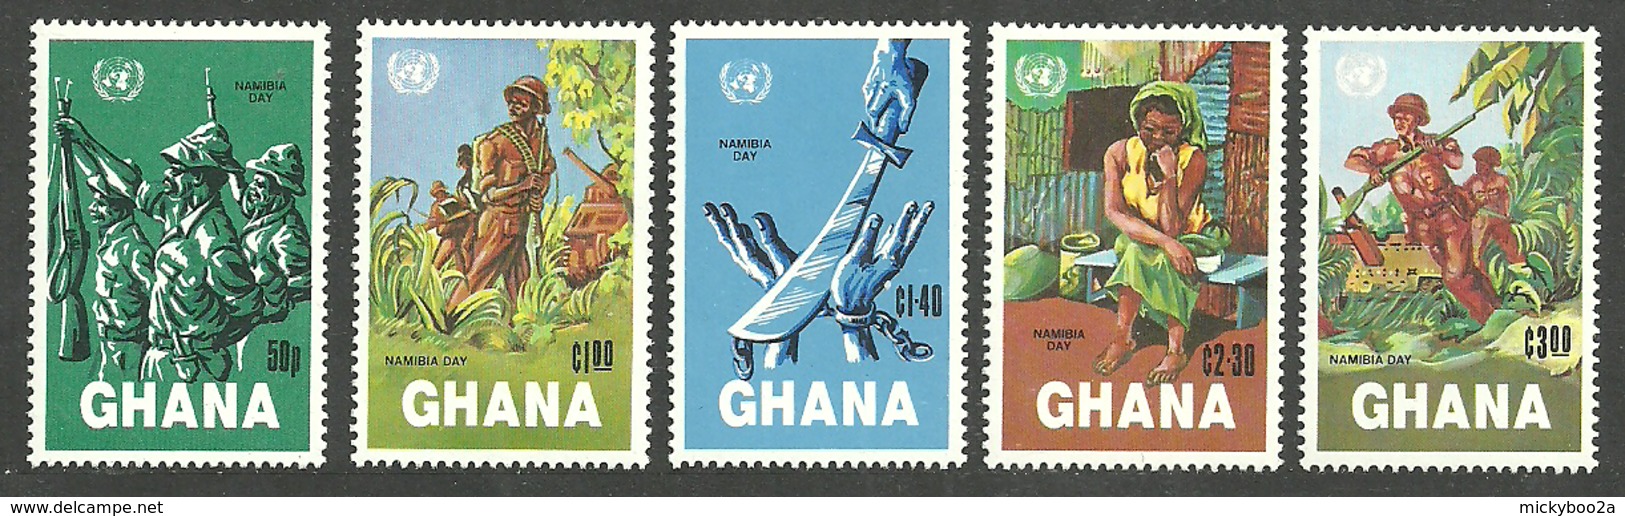 GHANA 1983 NAMIBIA DAY MILITARY SET MNH - Ghana (1957-...)